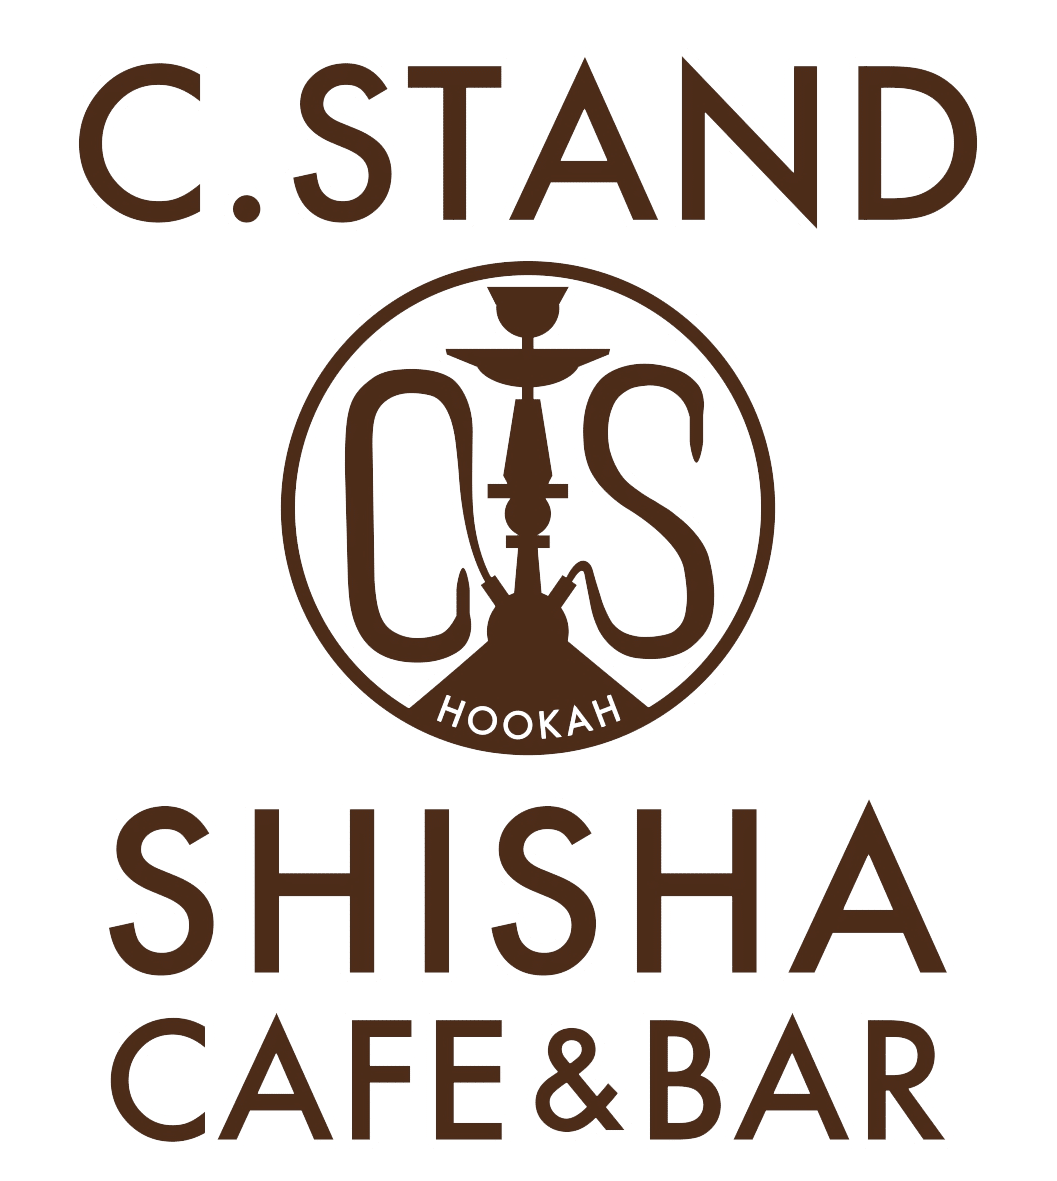 Shisha Cafe & Bar C.STAND Roppongi Branch